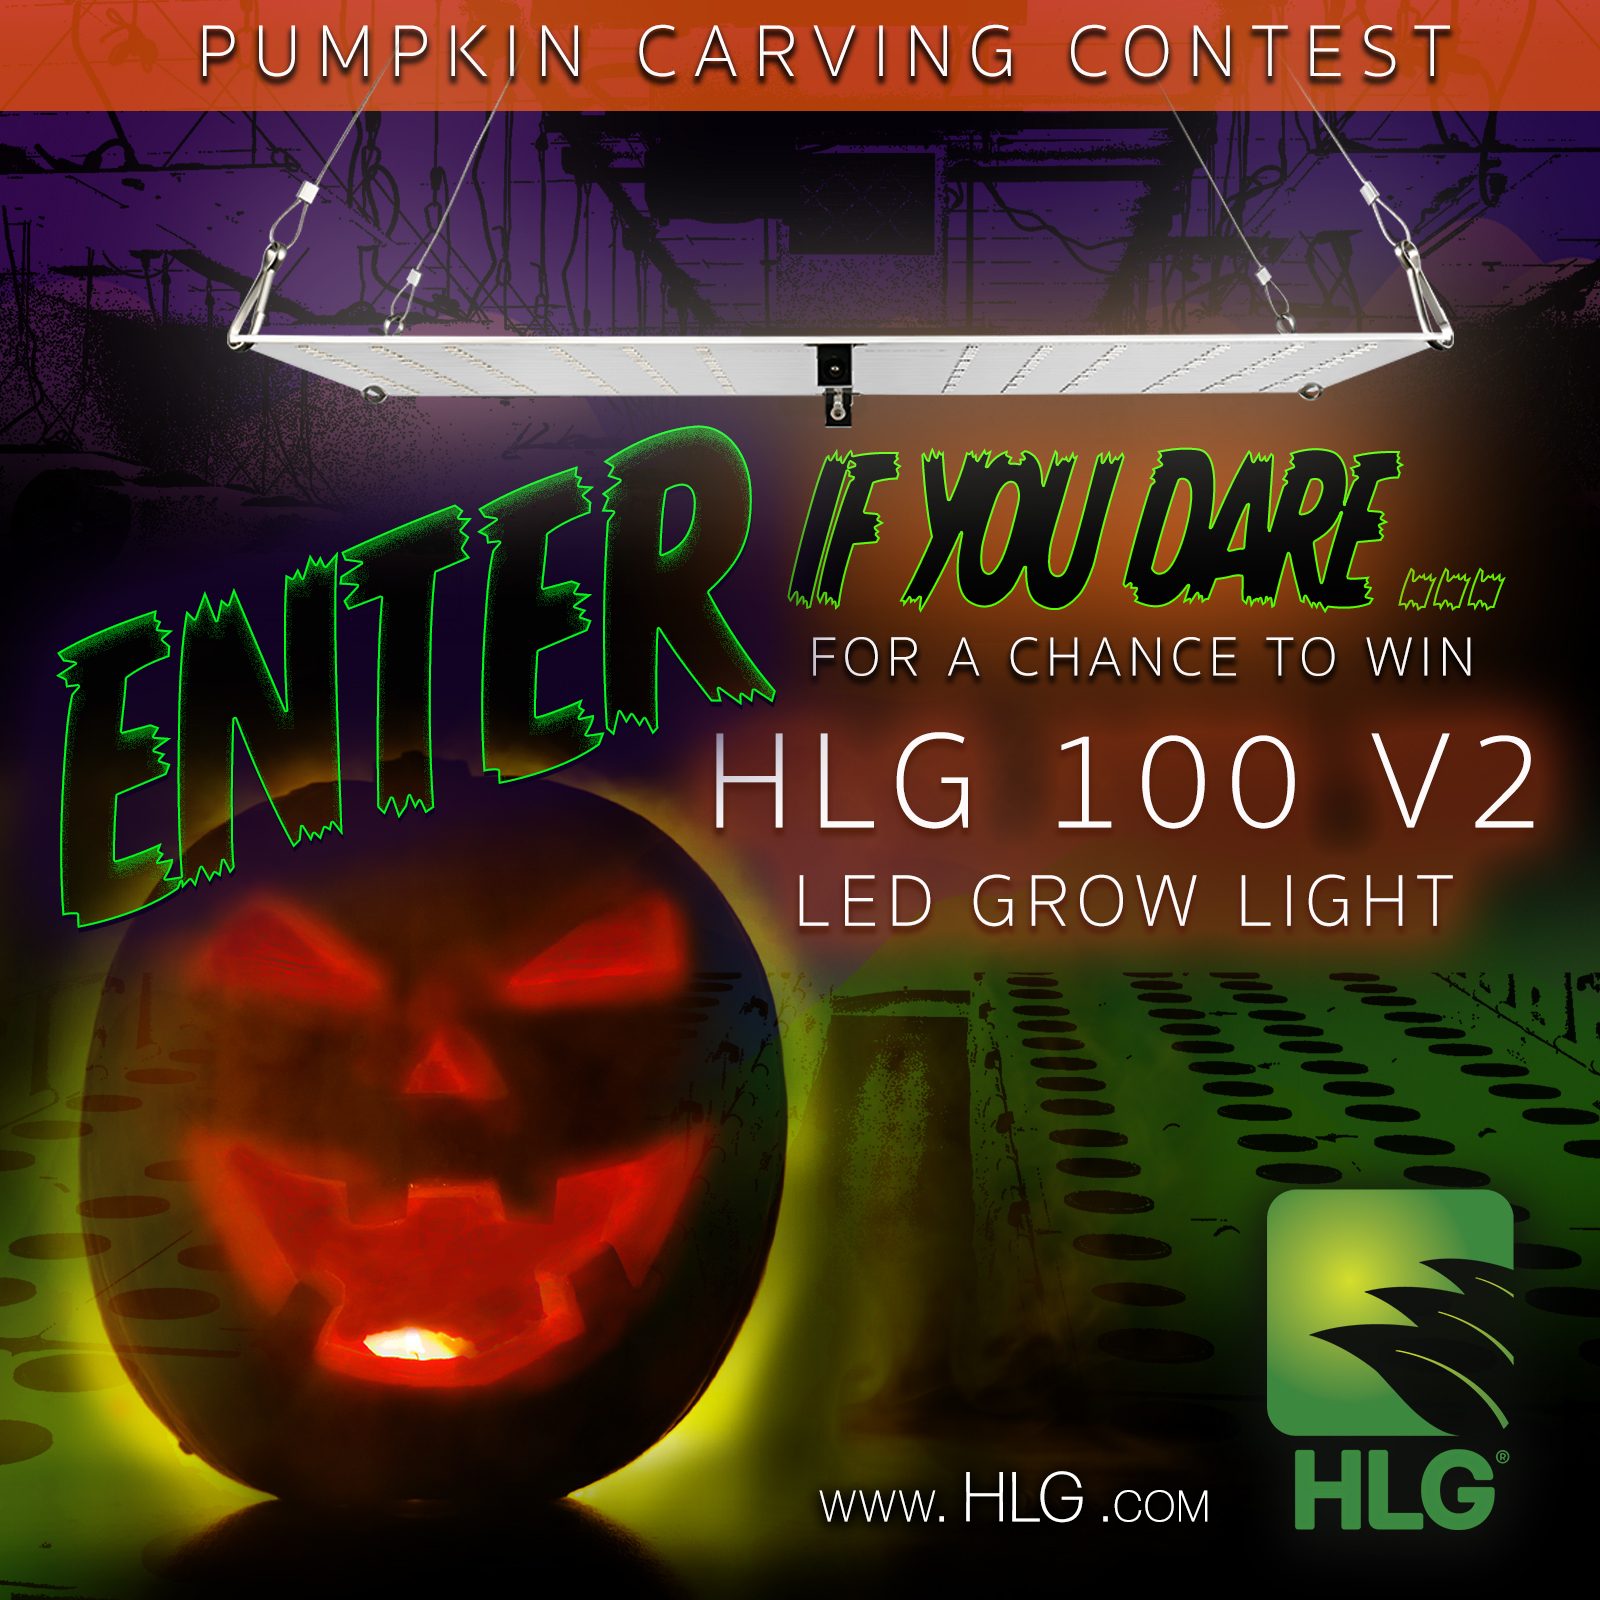 HLG_pumpkin carving.jpg